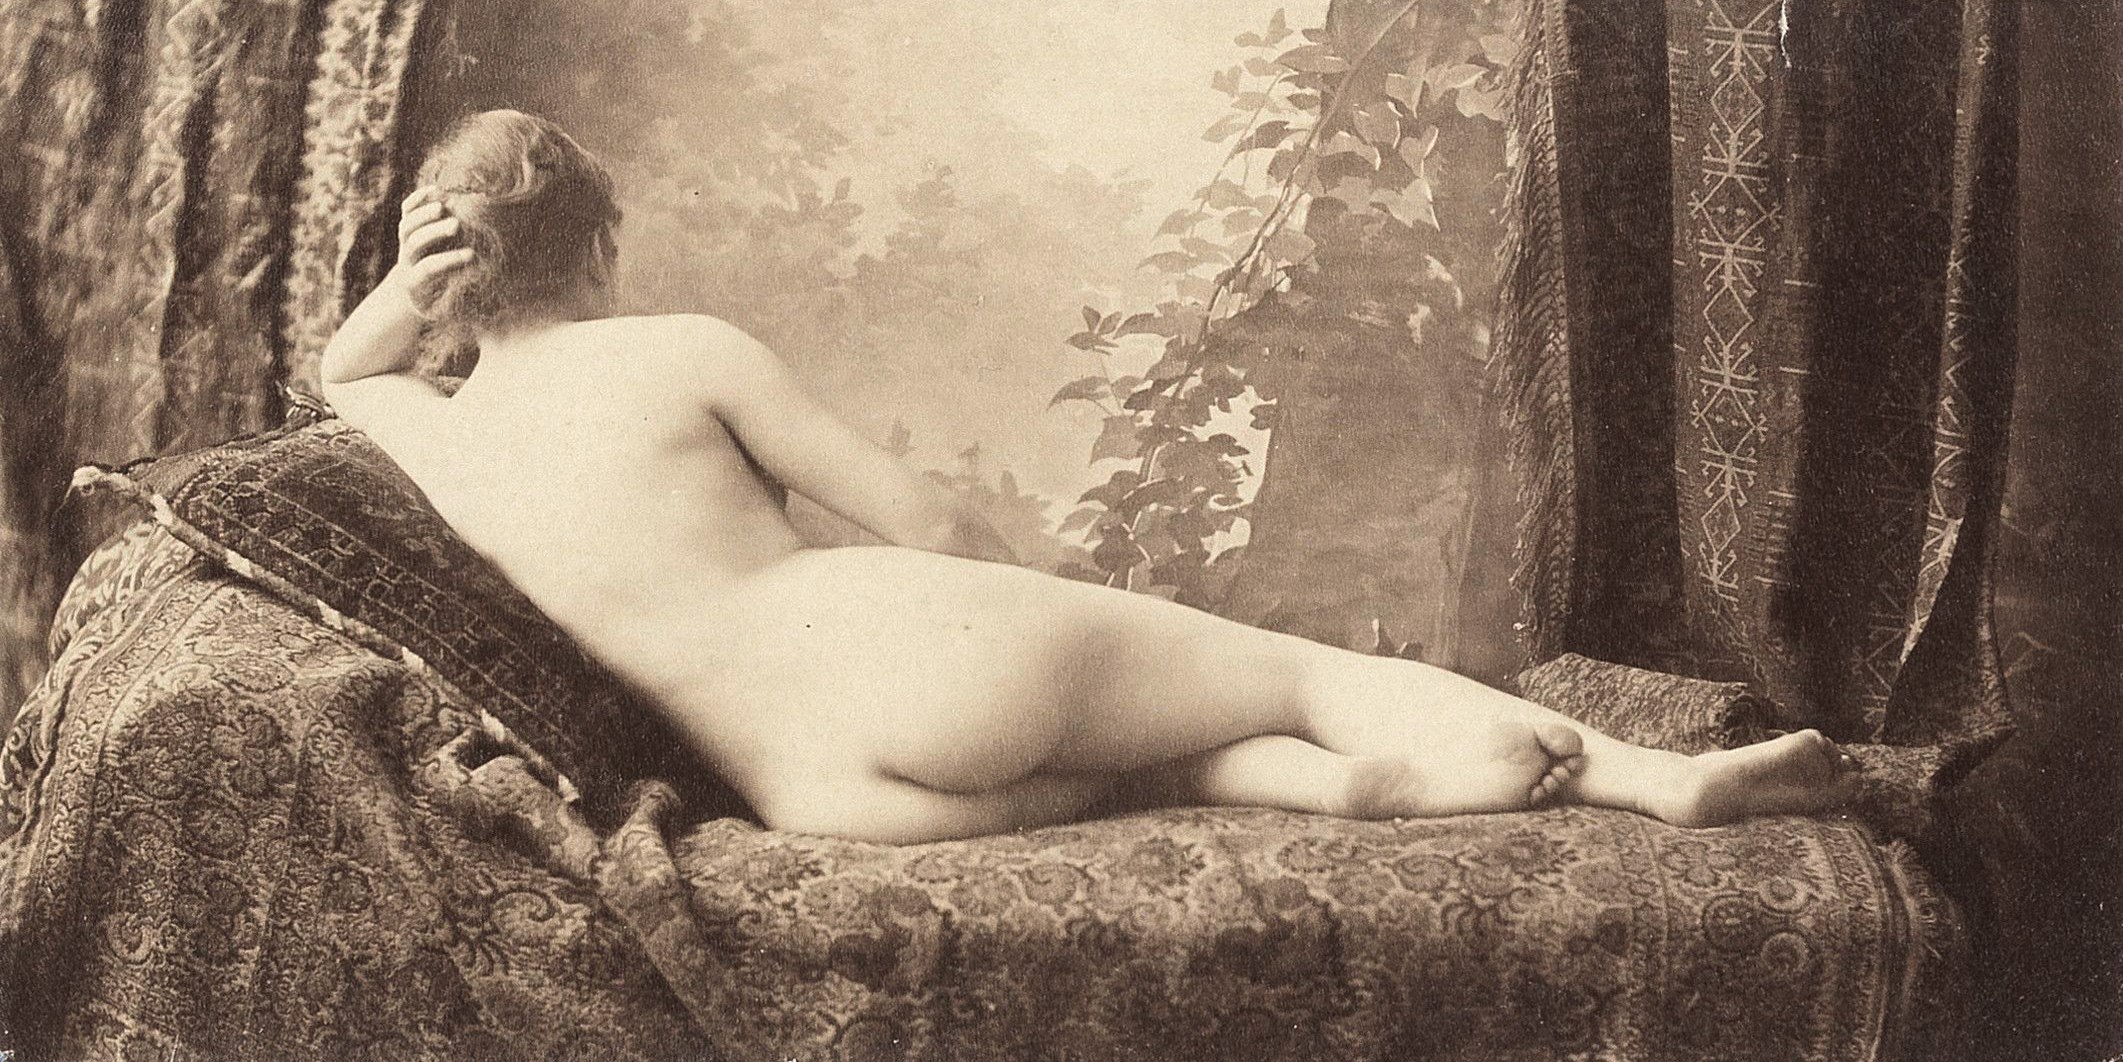 1800s pornography